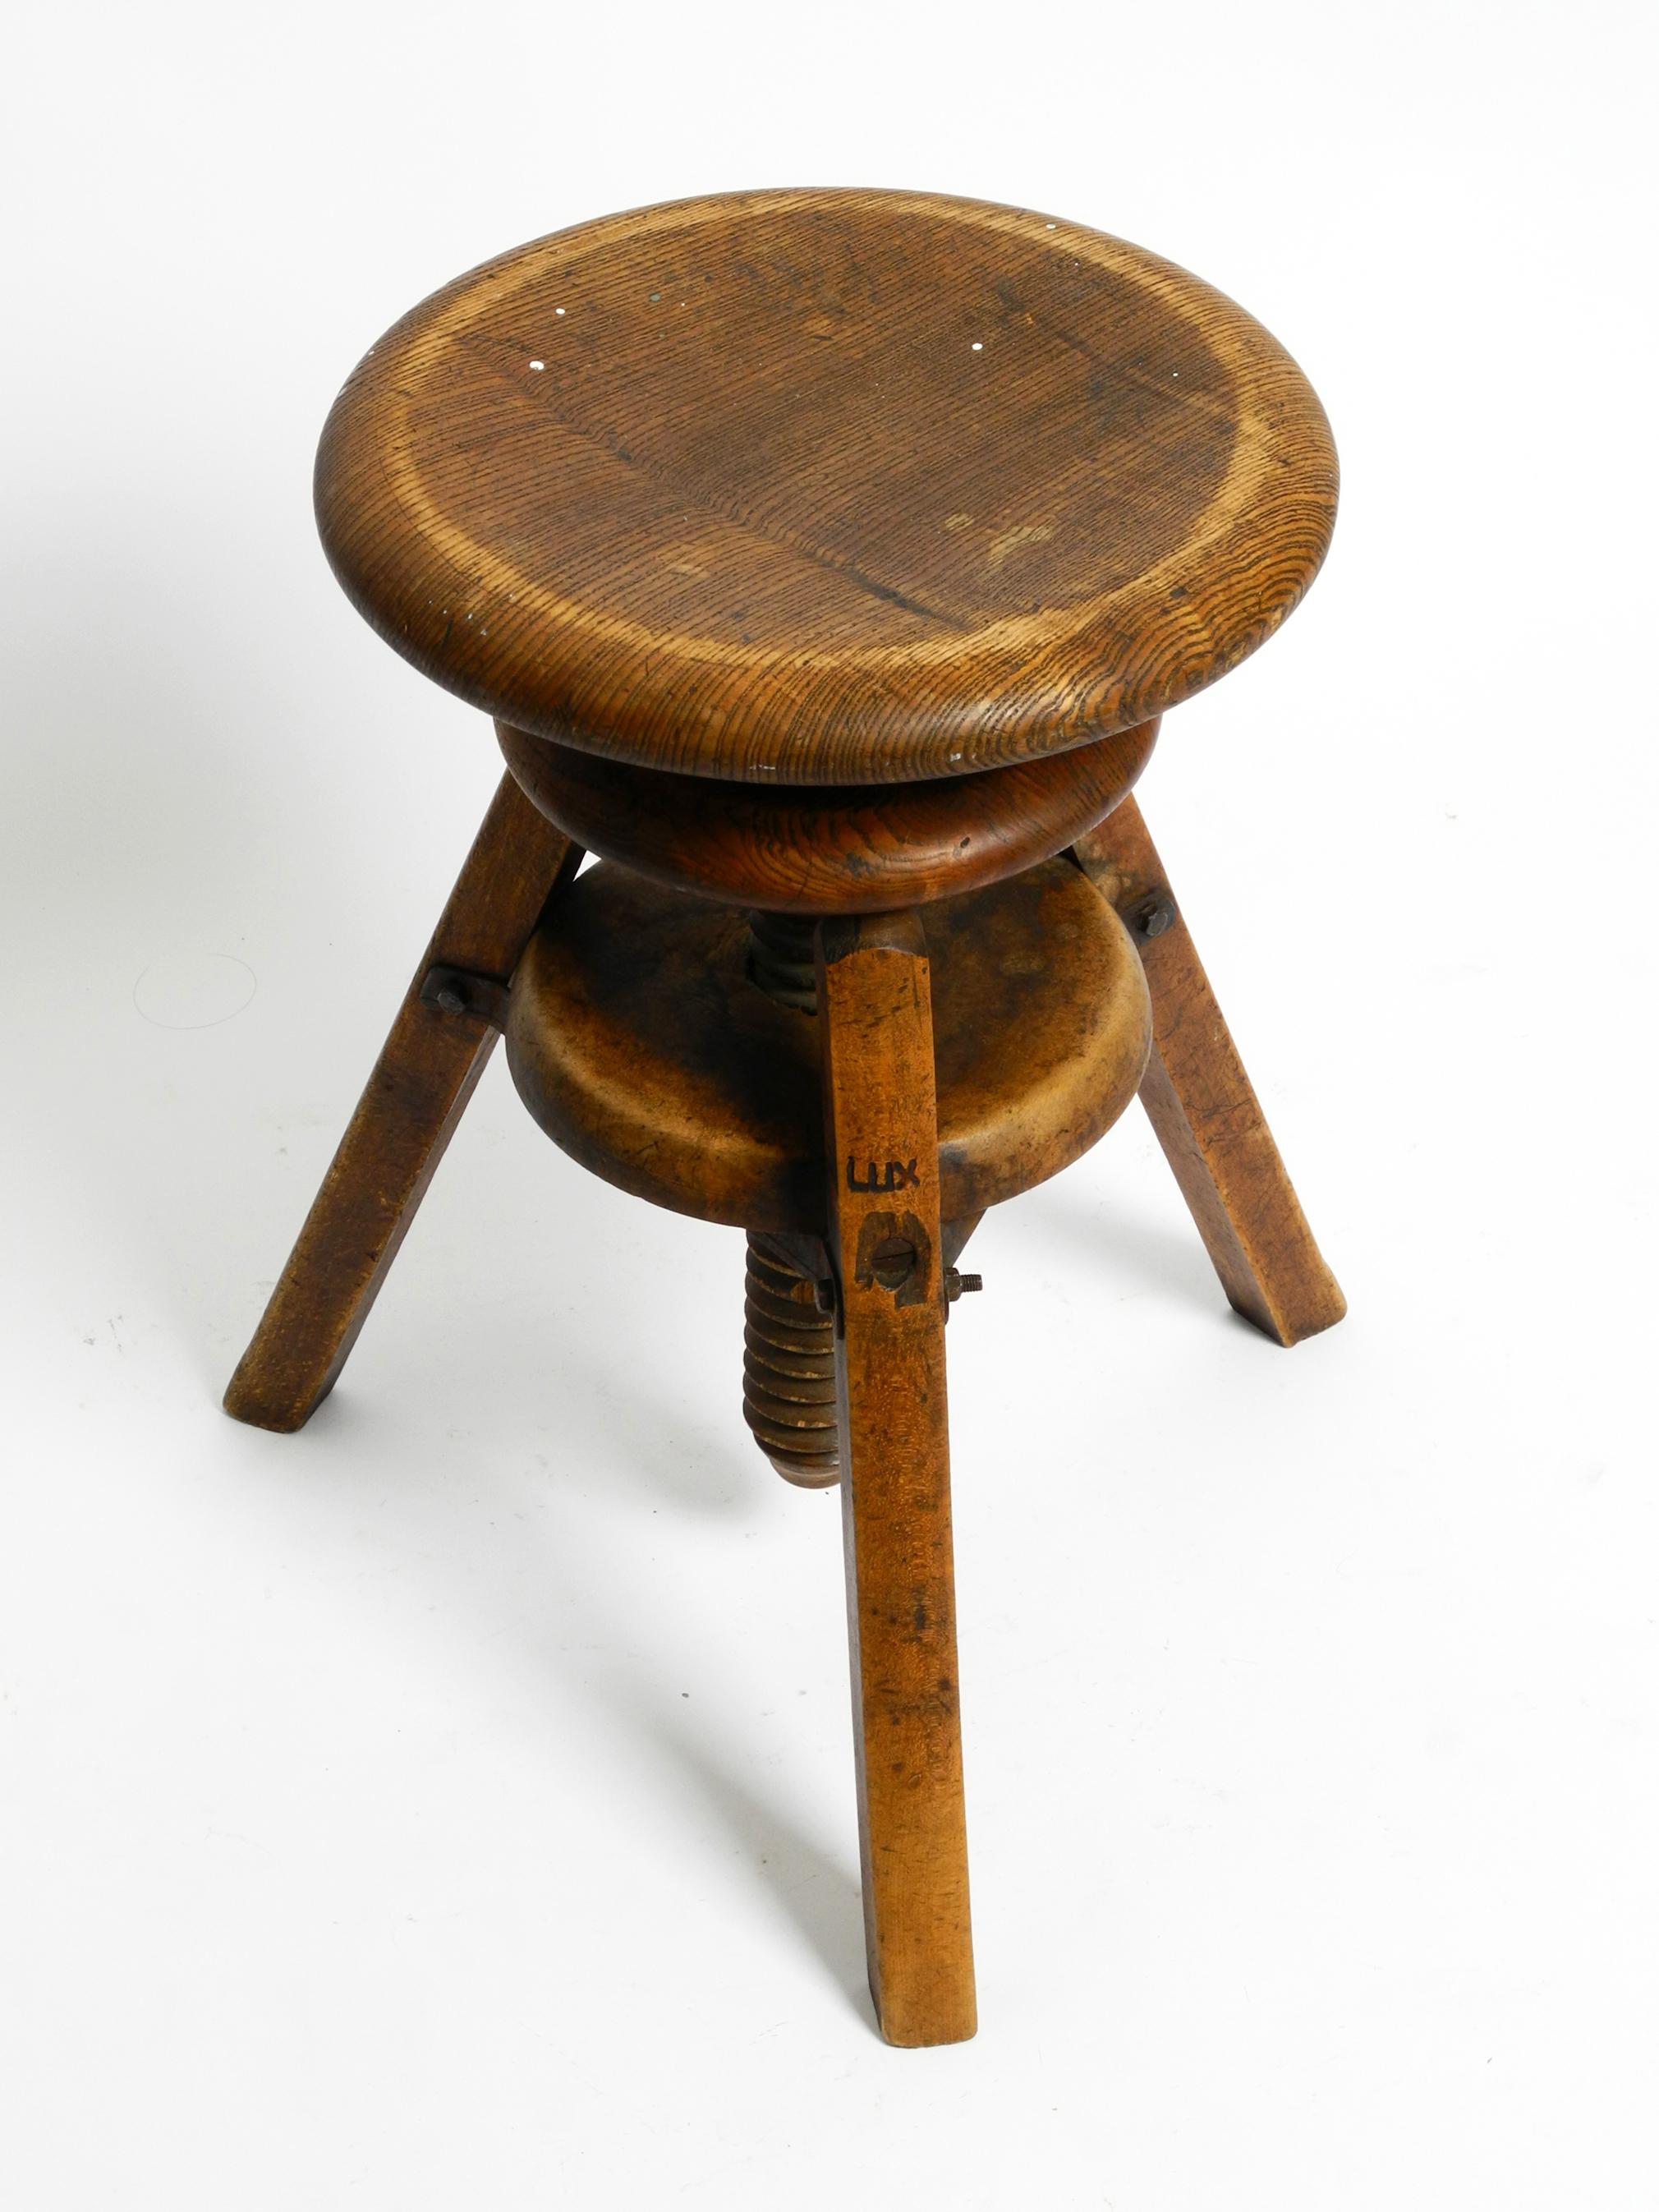 Industrial Original 30s French industrial swivel stool made of heavy oak